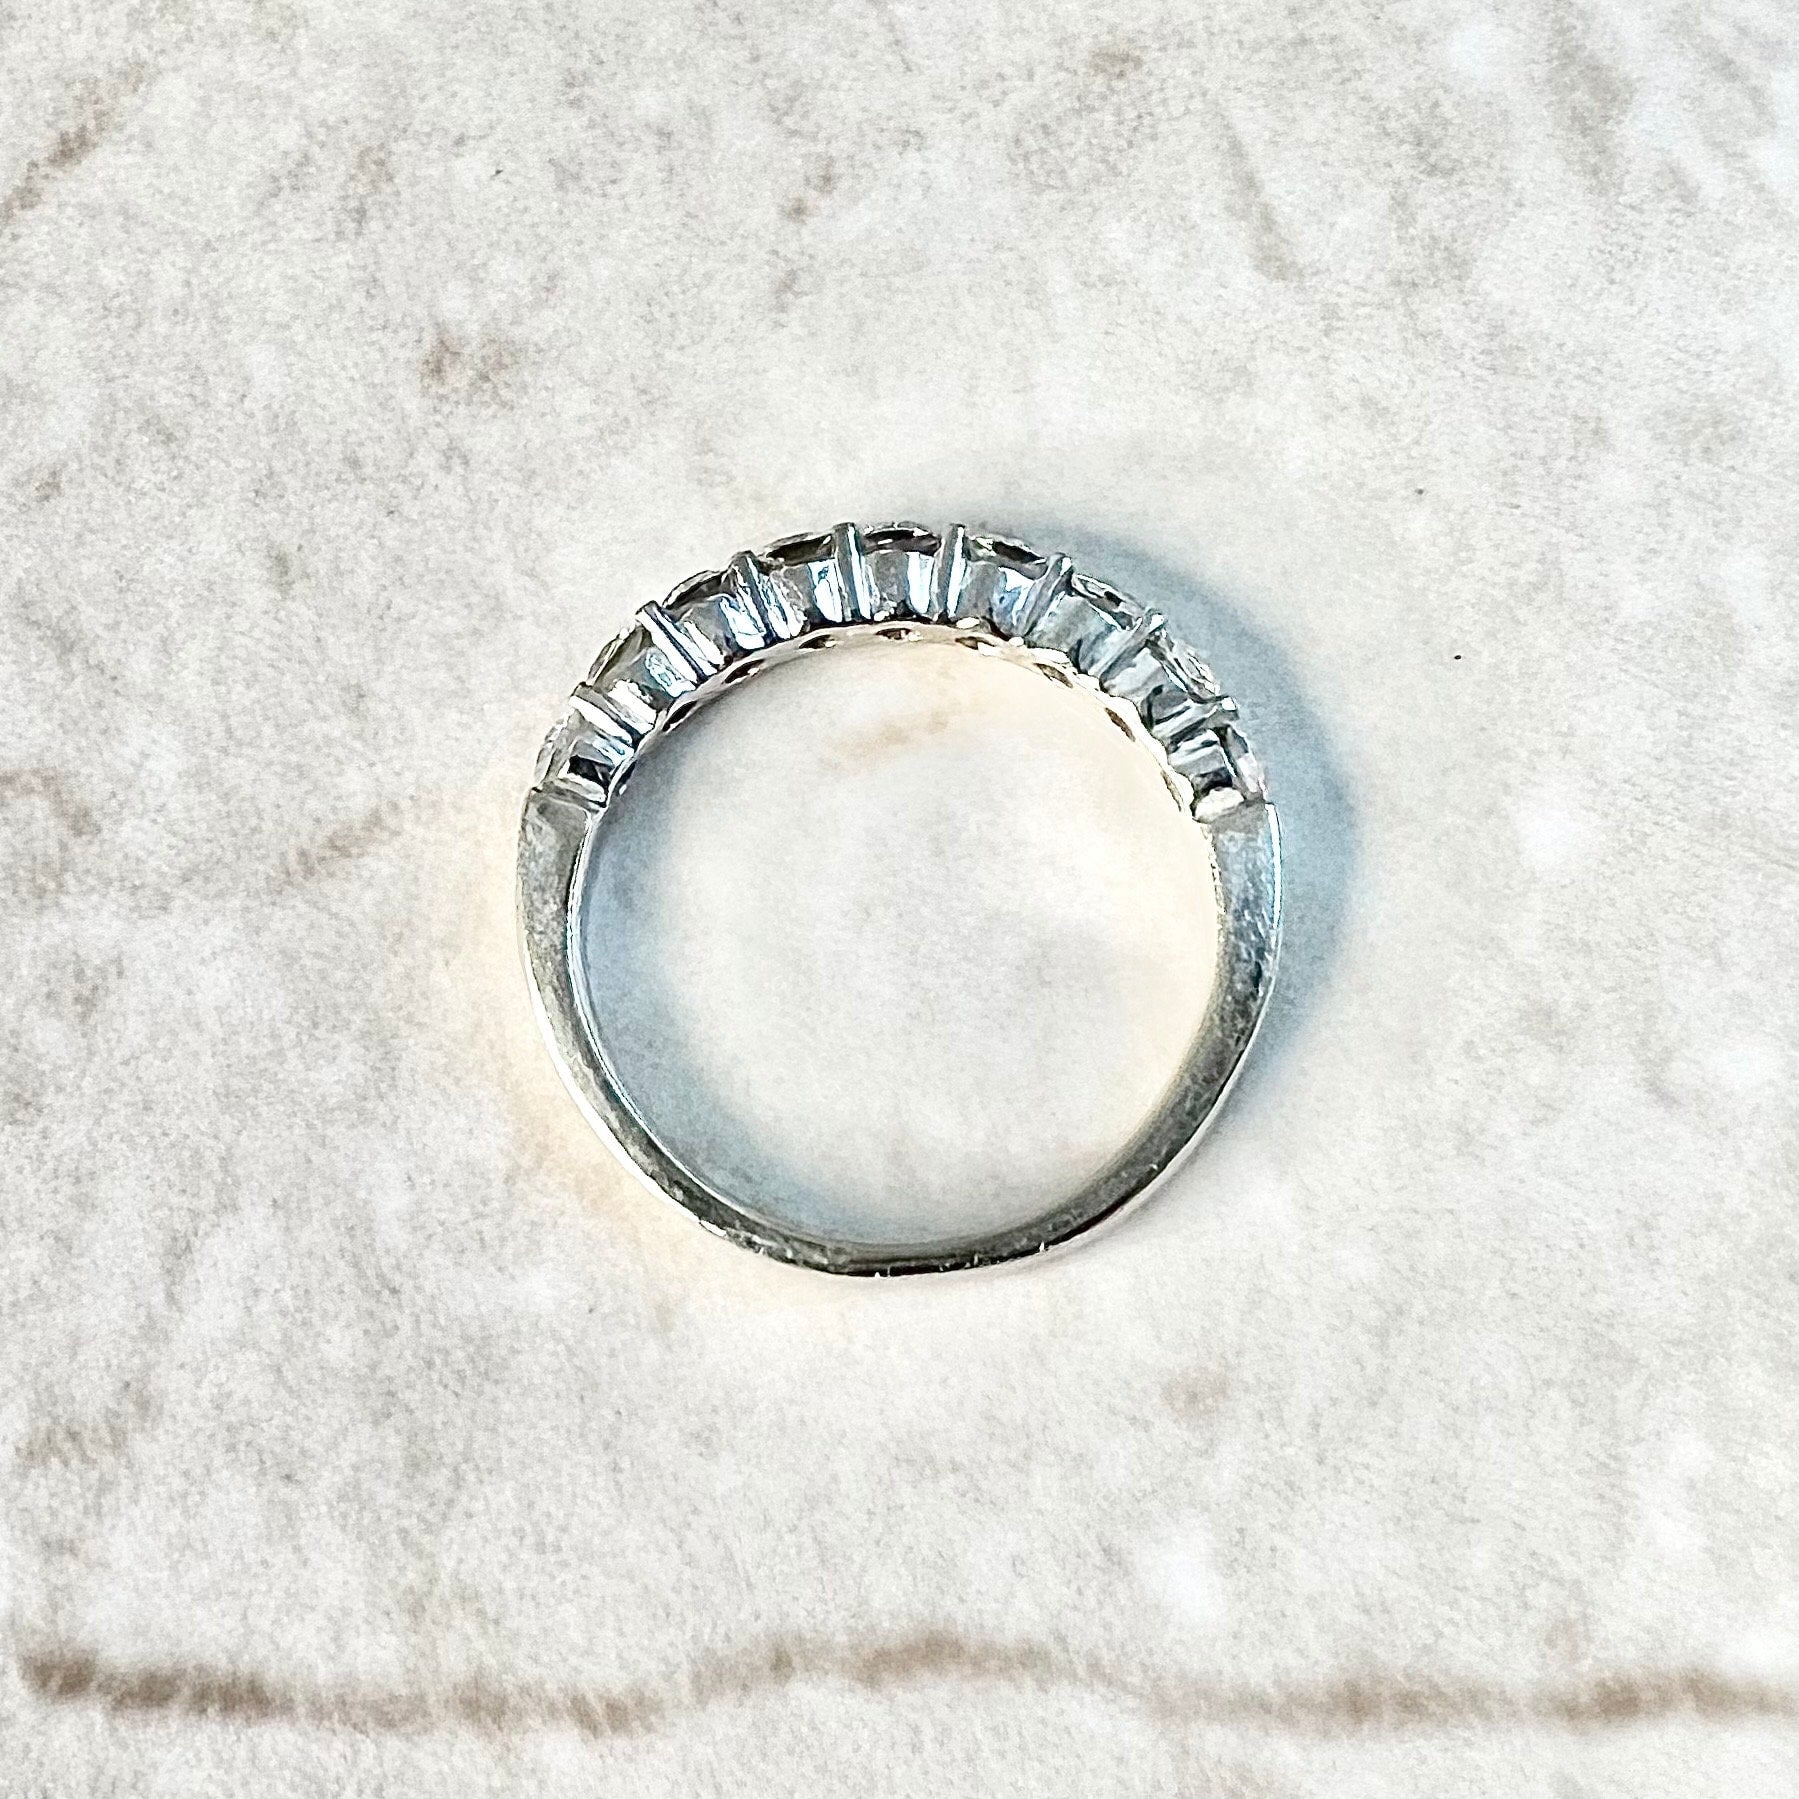 0.75 CT 18K Diamond Band Ring - White Gold Diamond Half Eternity Ring - 14K Diamond Ring - Anniversary Gifts For Her - Diamond Wedding Ring